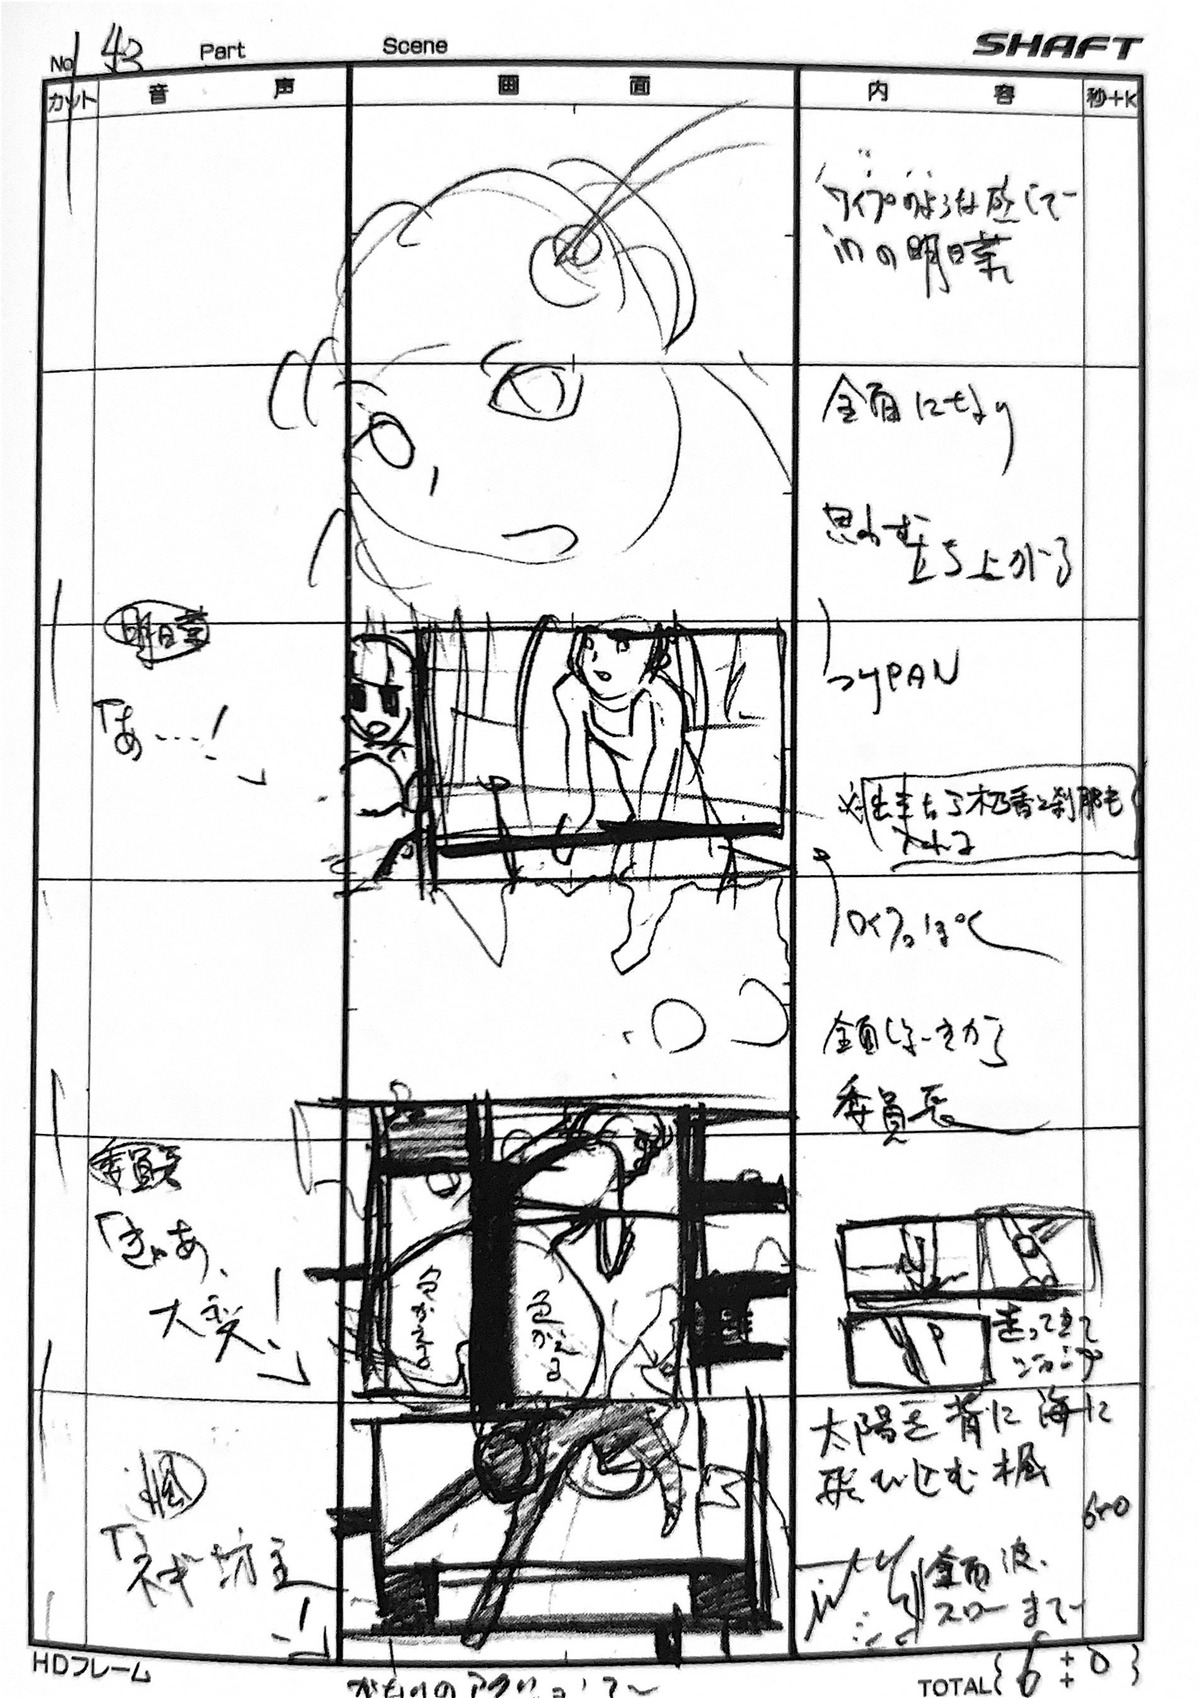 akiyuki_shinbo negima!?_spring_special? production_materials storyboard